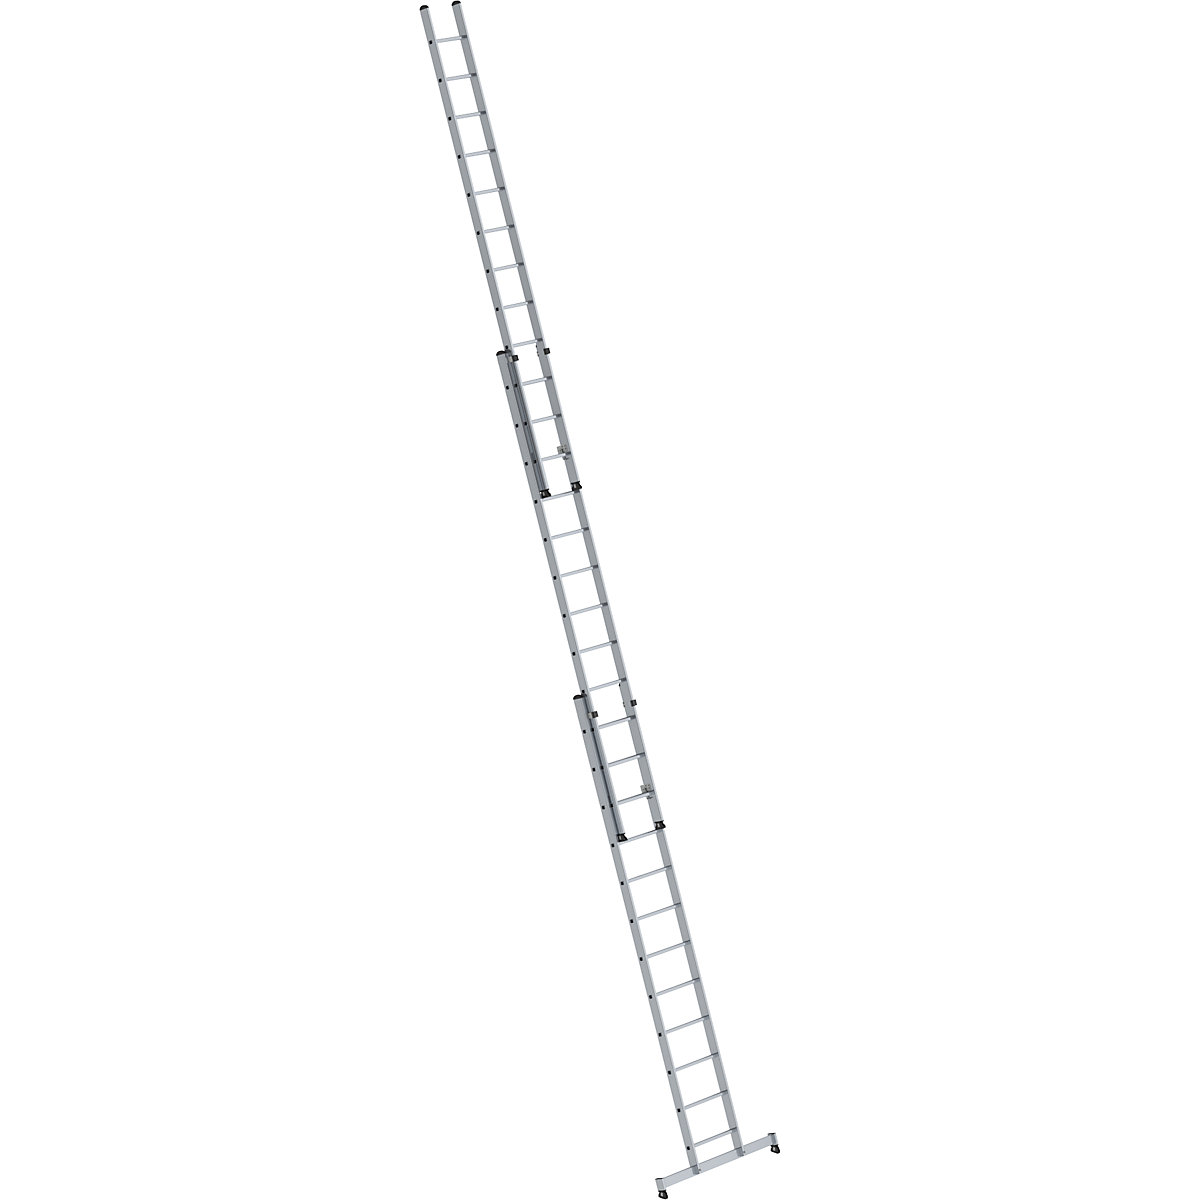 Height adjustable lean-to ladder – MUNK: extension ladder, 2-part